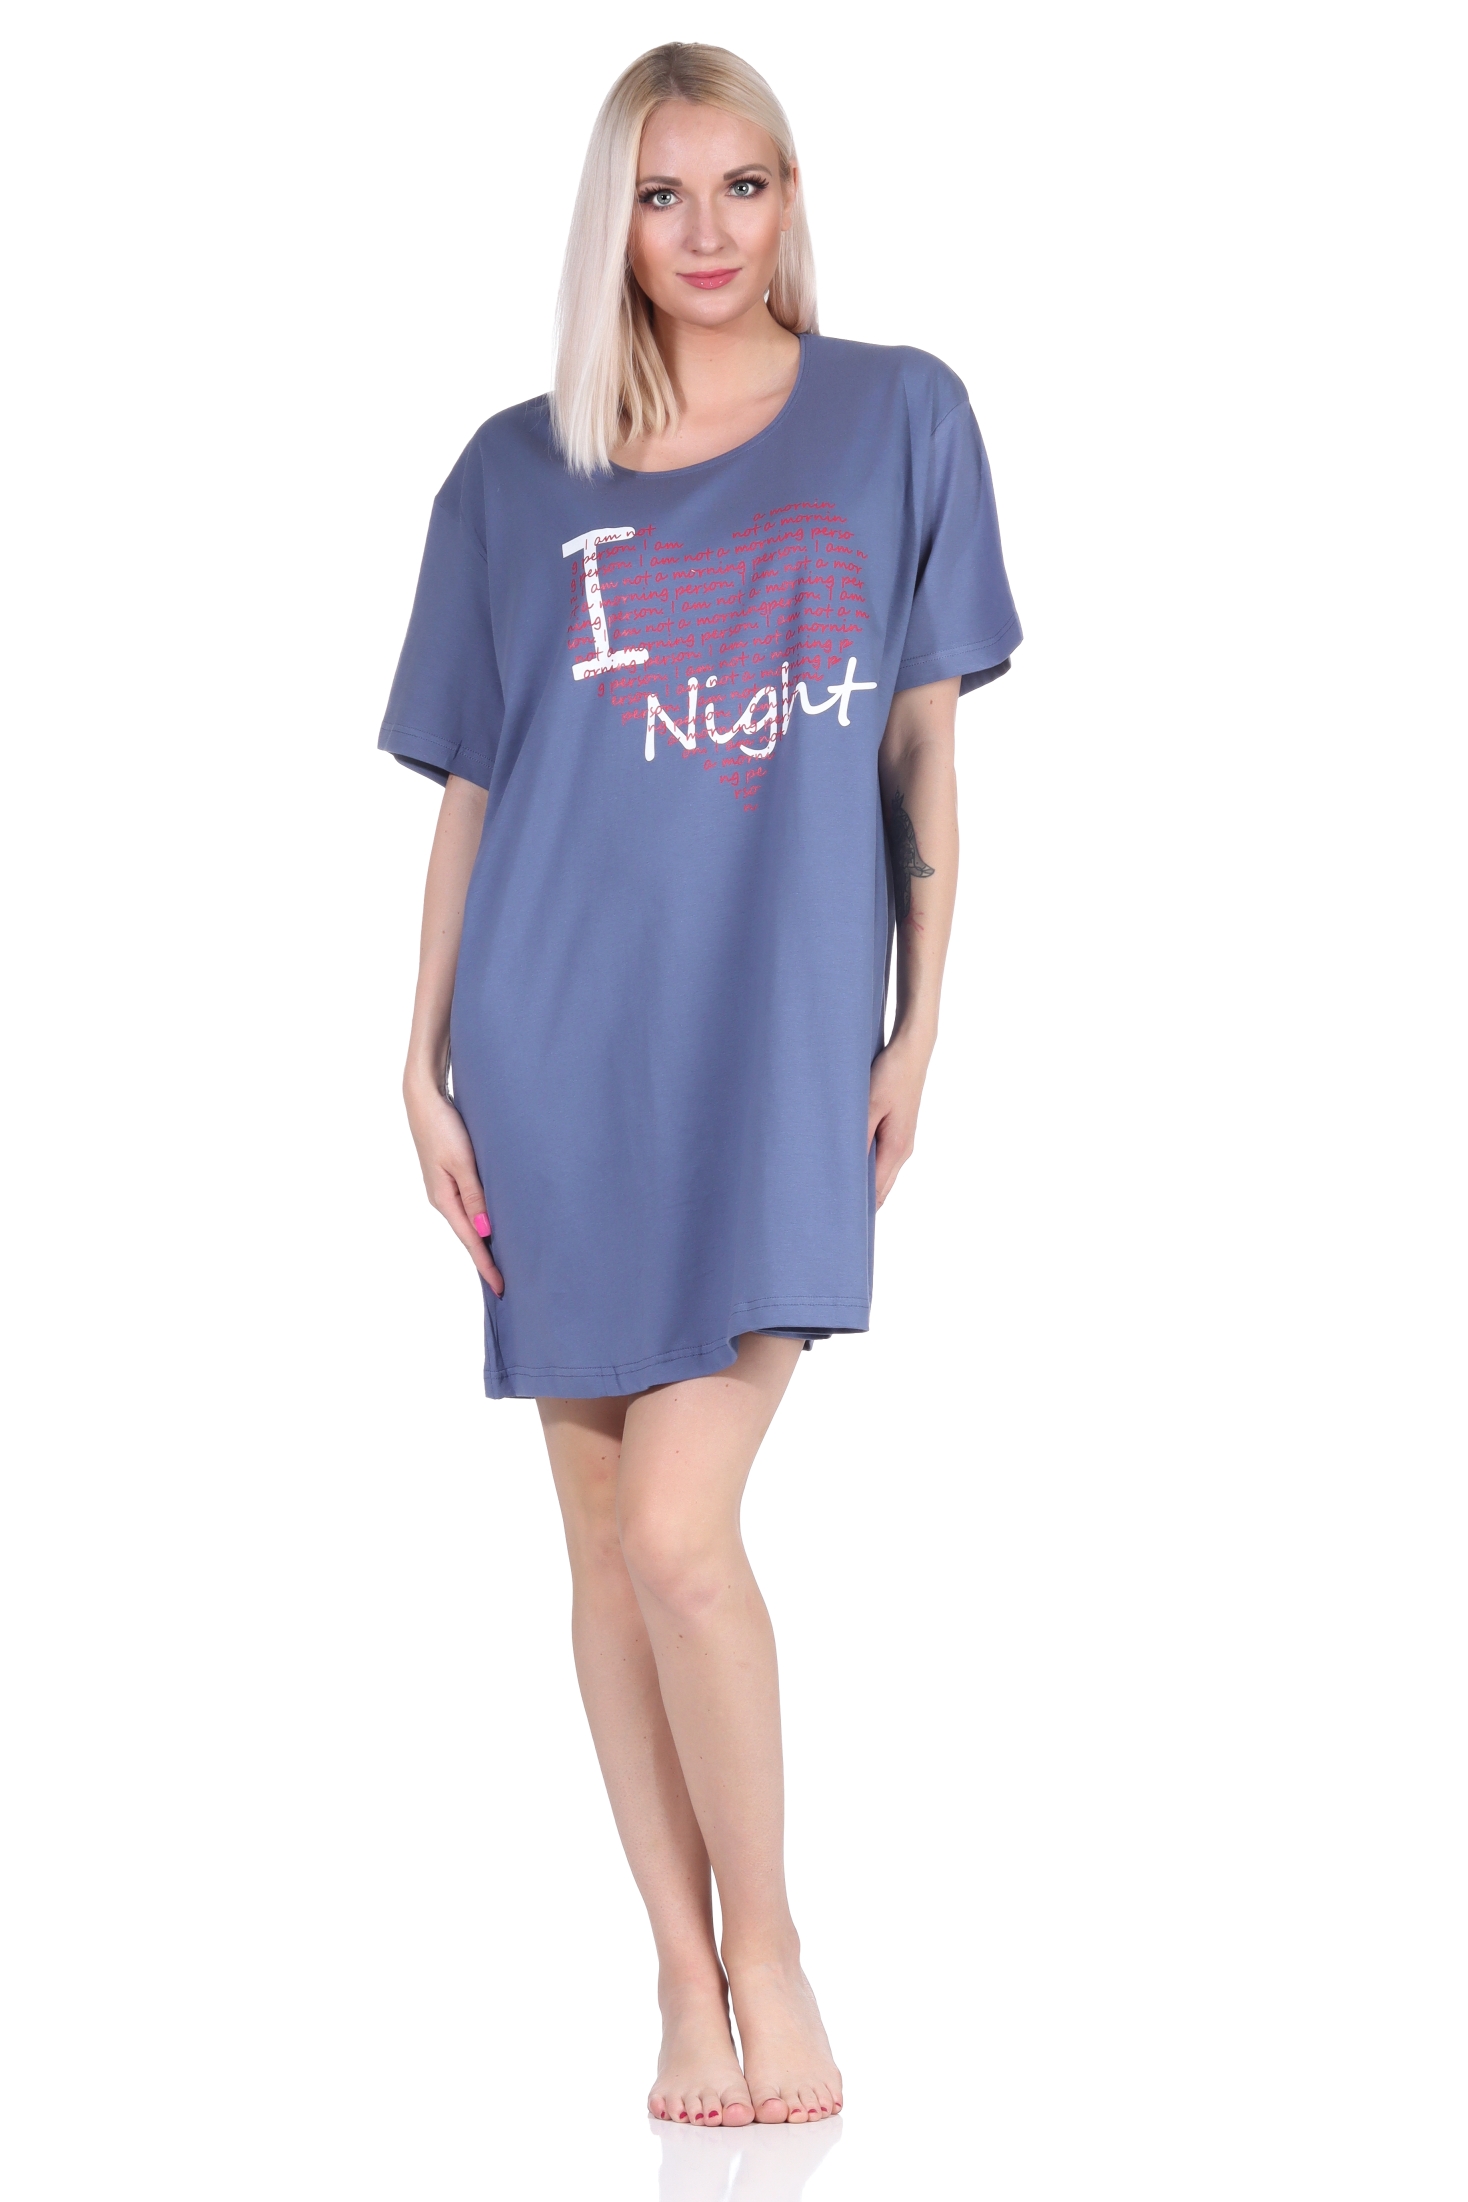 Damen 2er Pack kurzarm Nachthemd Schlafshirt in 2 tollen Designs 